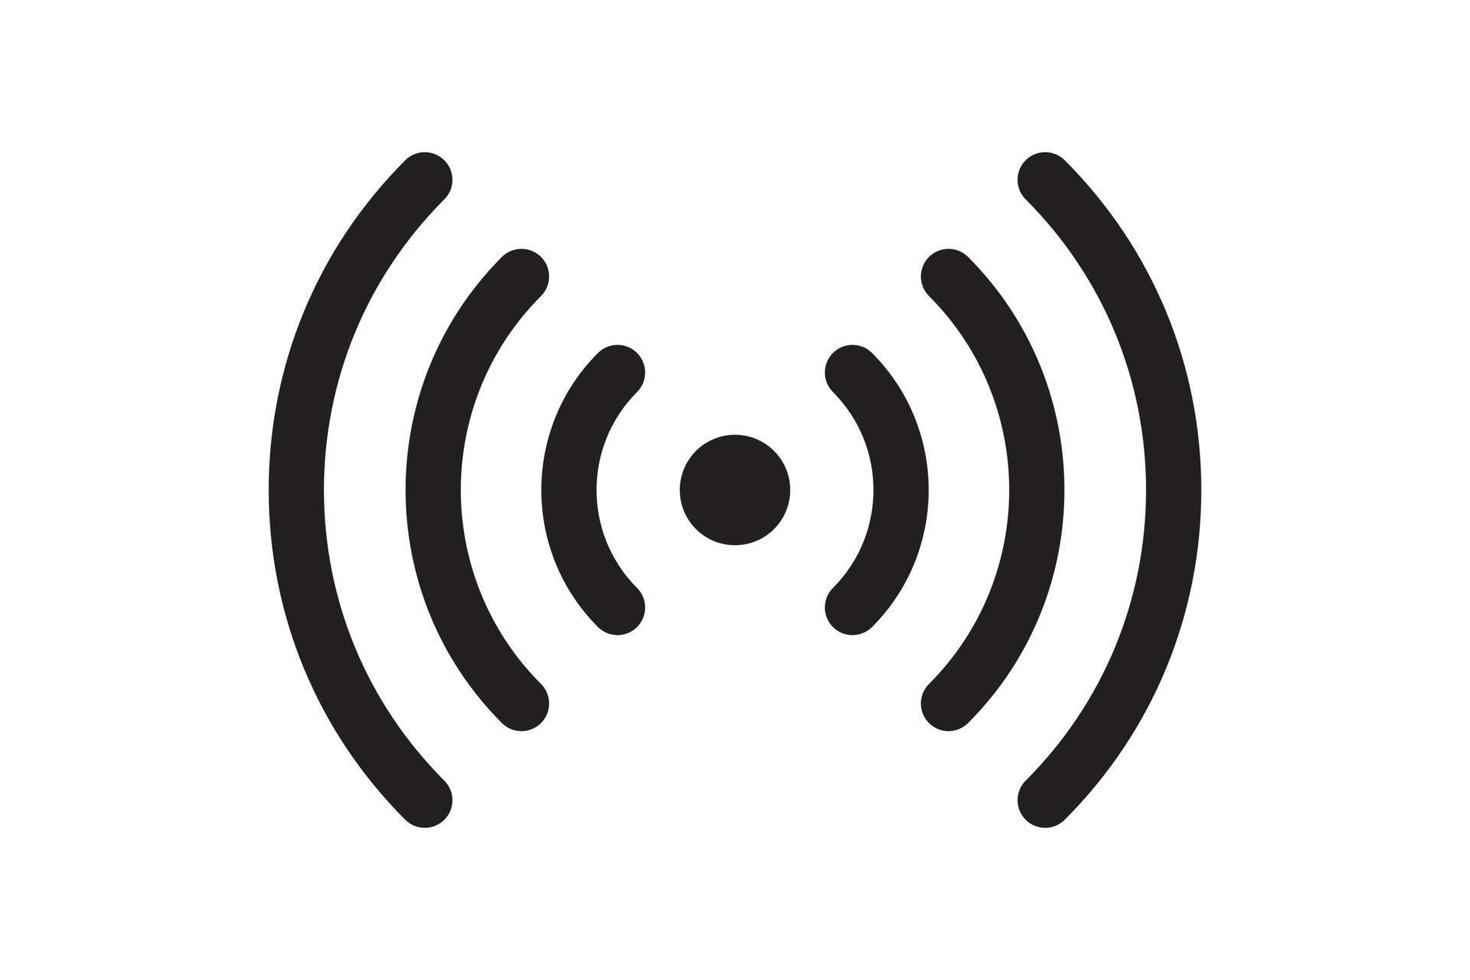 conexión de señal de símbolo wi fi. señal de tecnología inalámbrica de internet vectorial. icono de comunicación de red wifi. vector